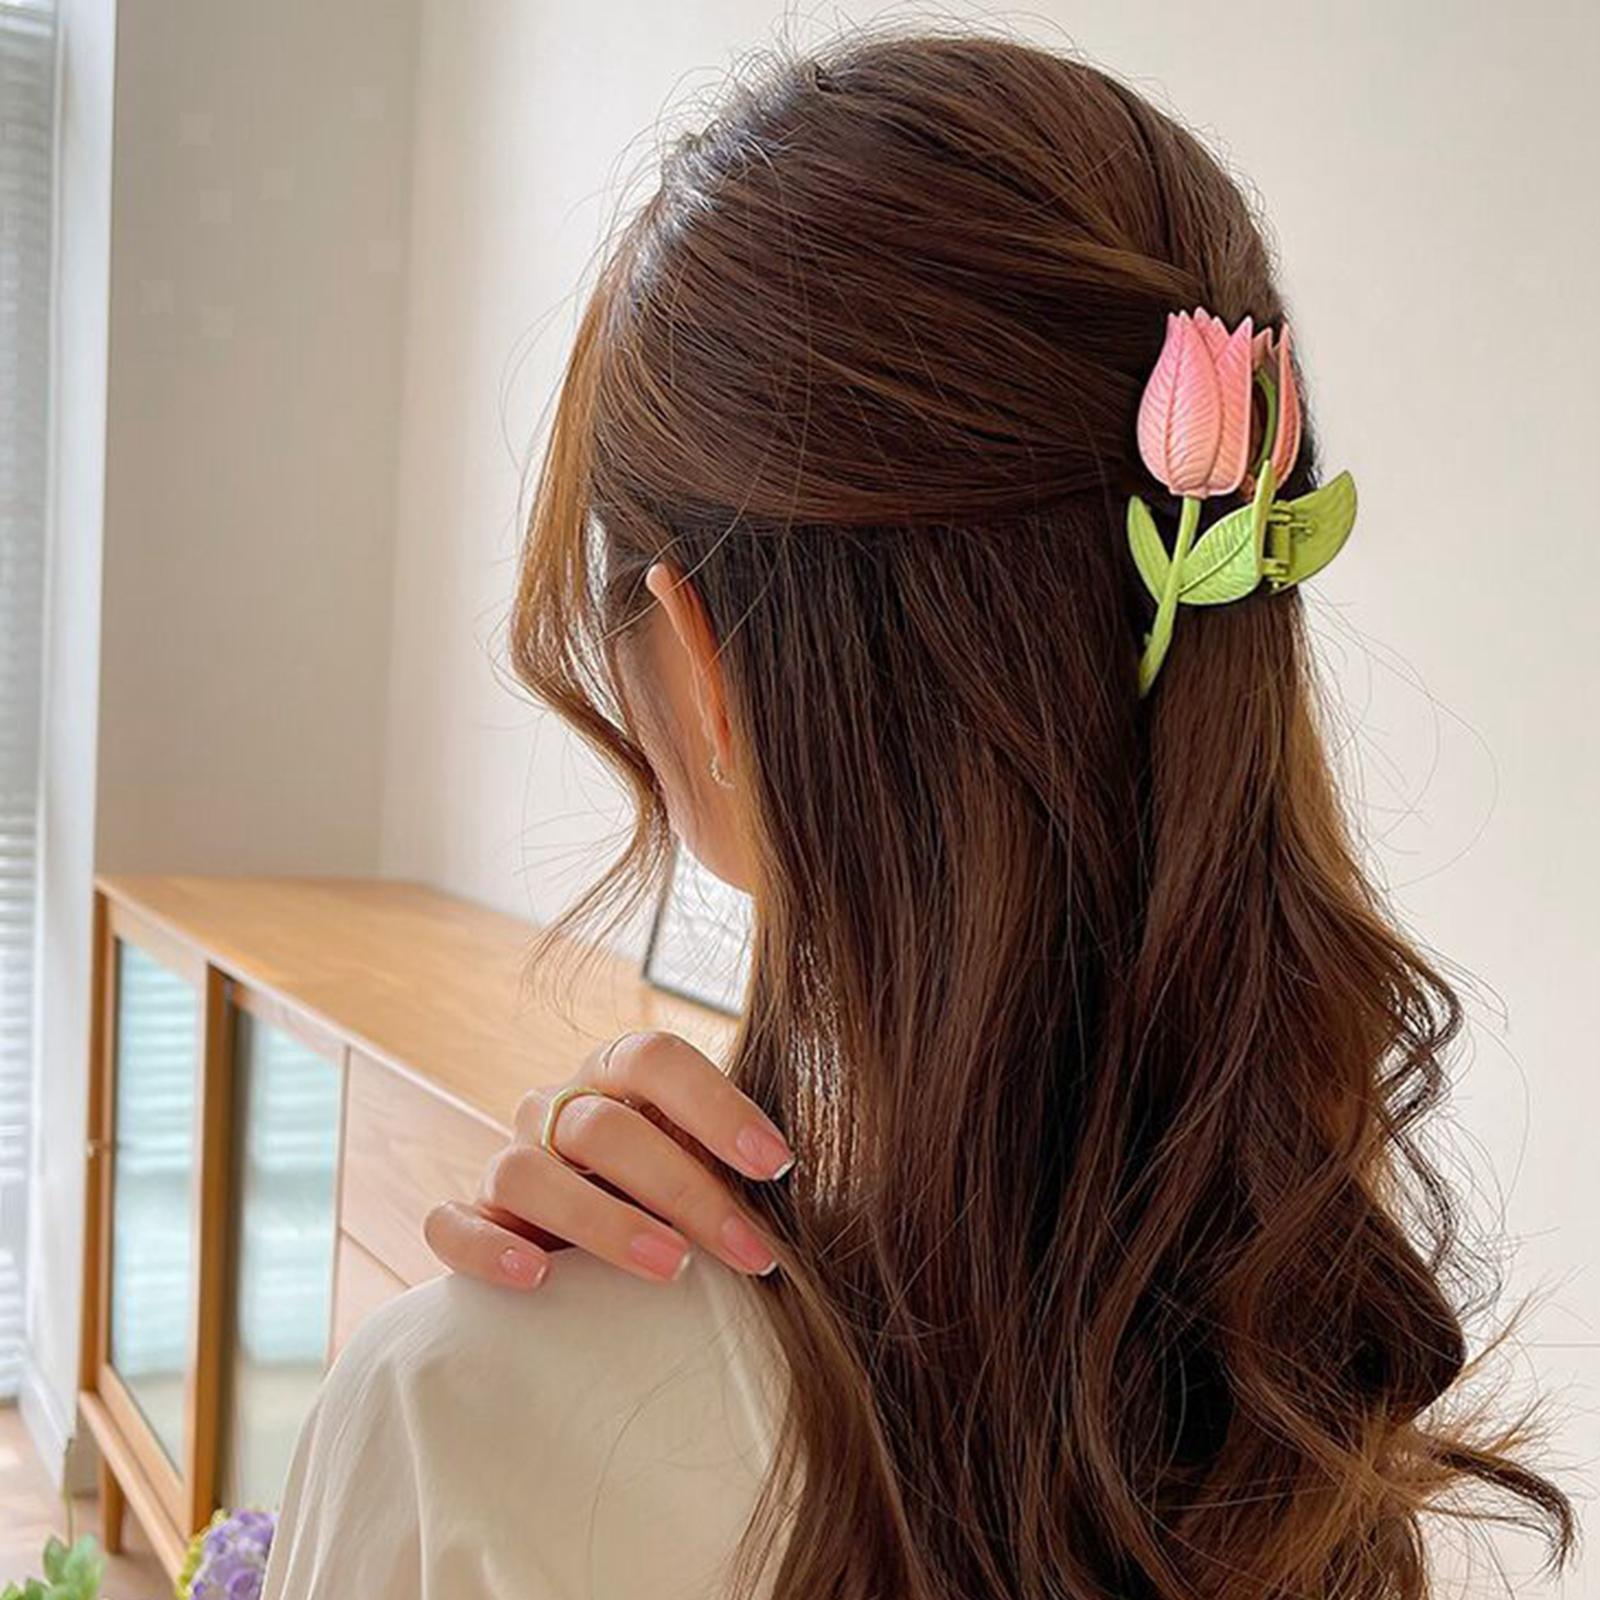 Women Flower Hair Headwear Hair Styling Accessories for Thin Thick Curly  Hair | eBay